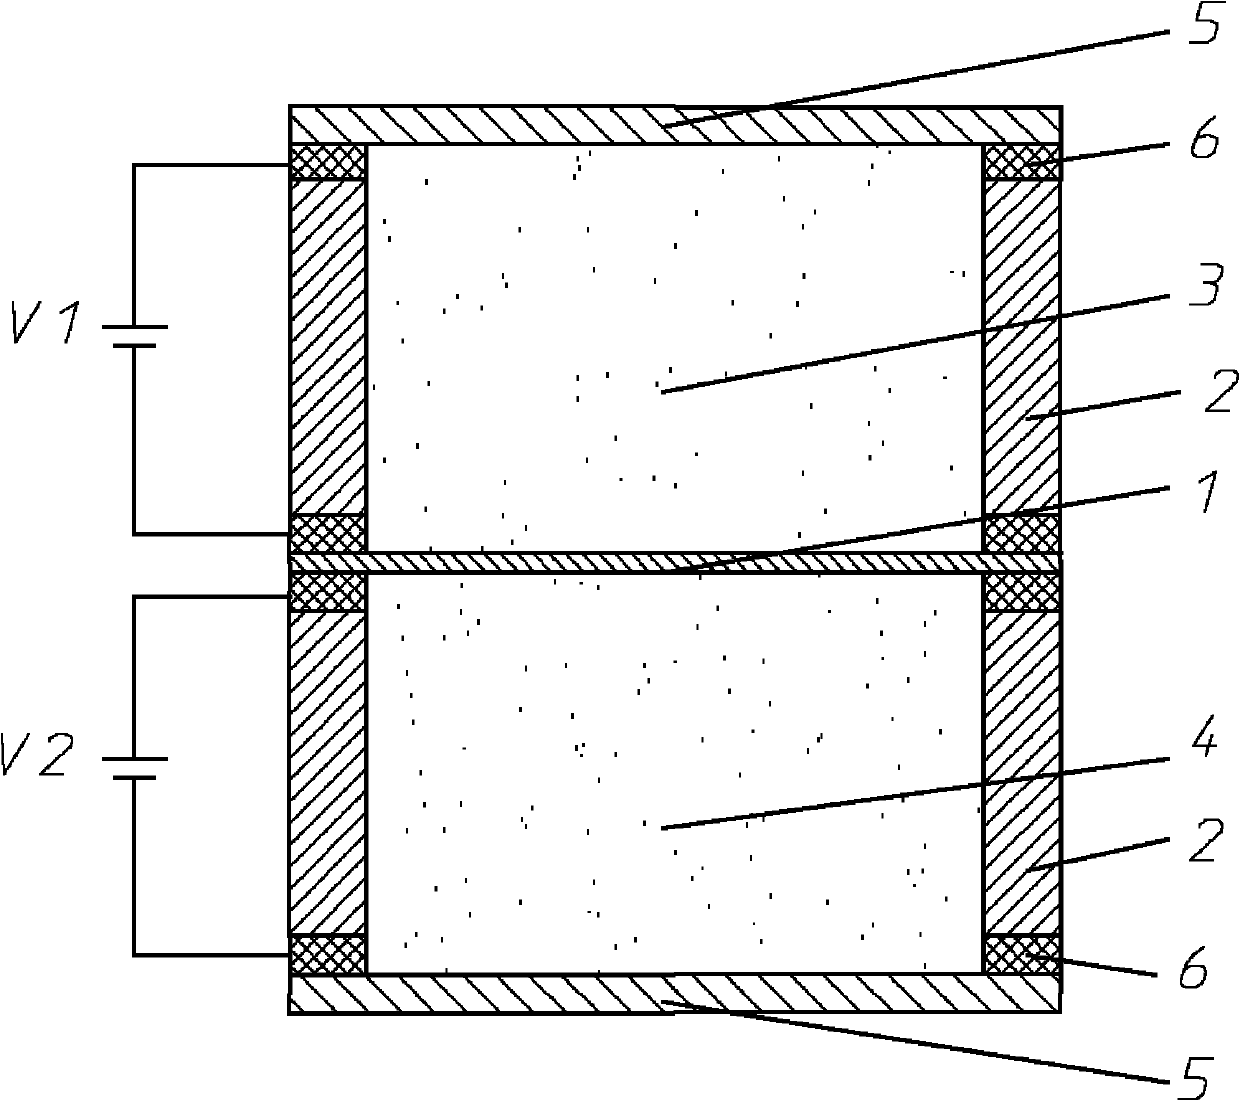 Varifocal double-liquid lens based on inverse piezoelectric effect